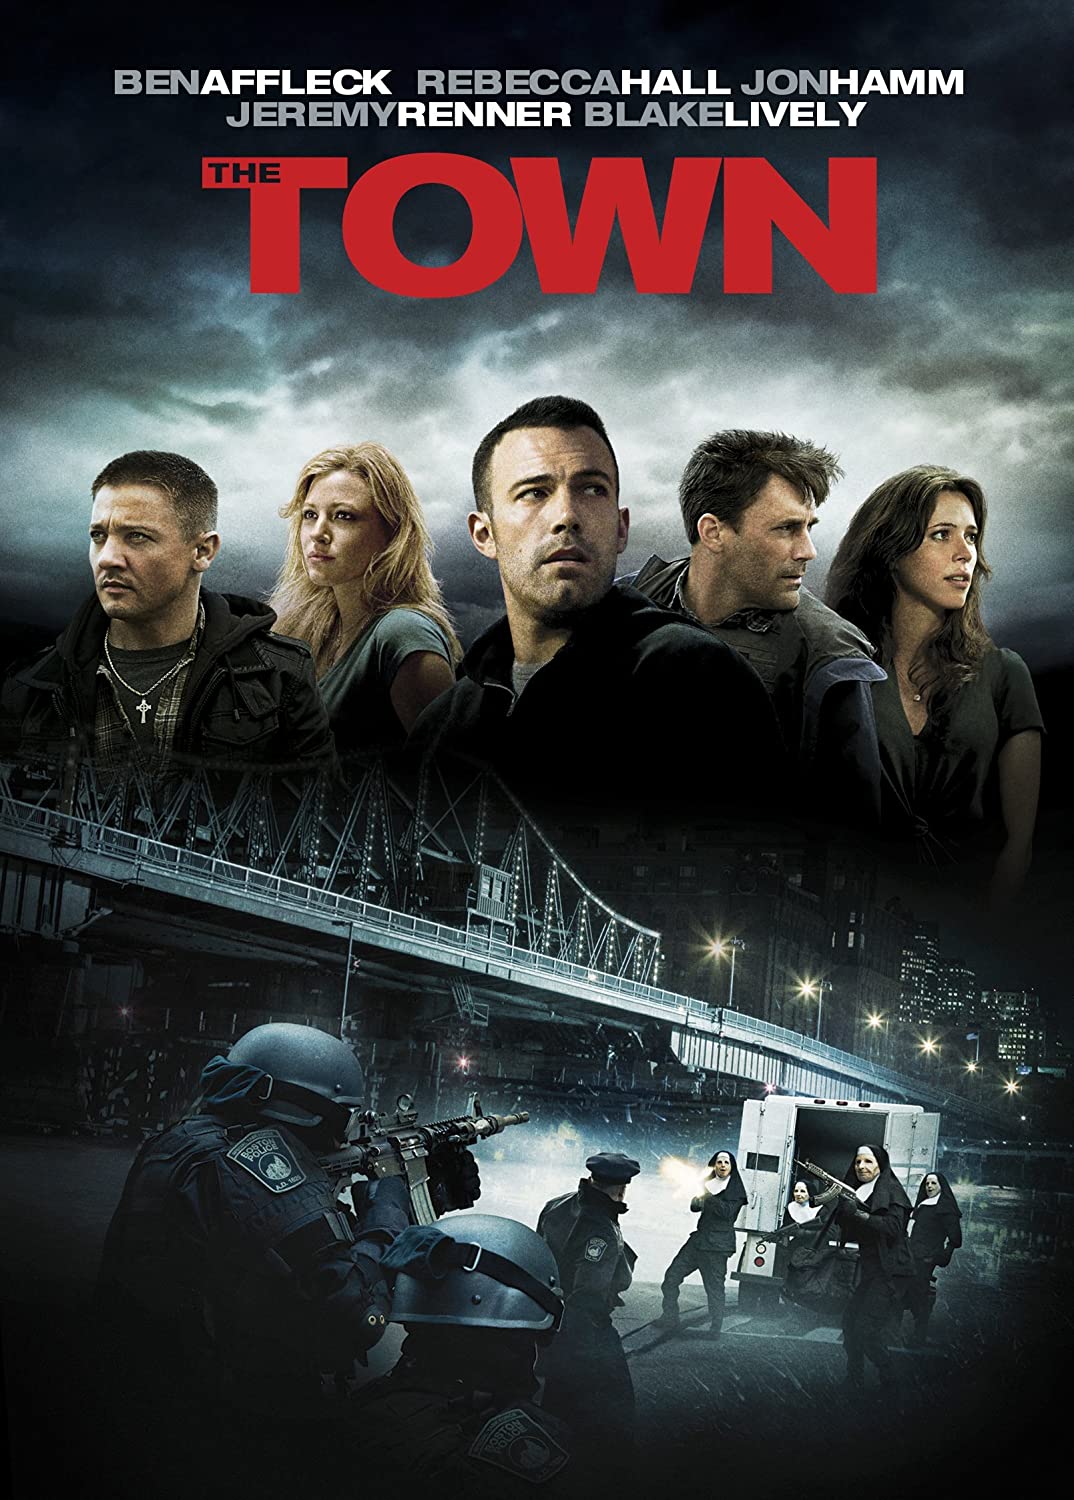 The Town [2010] - Thriller/Crime [DVD]